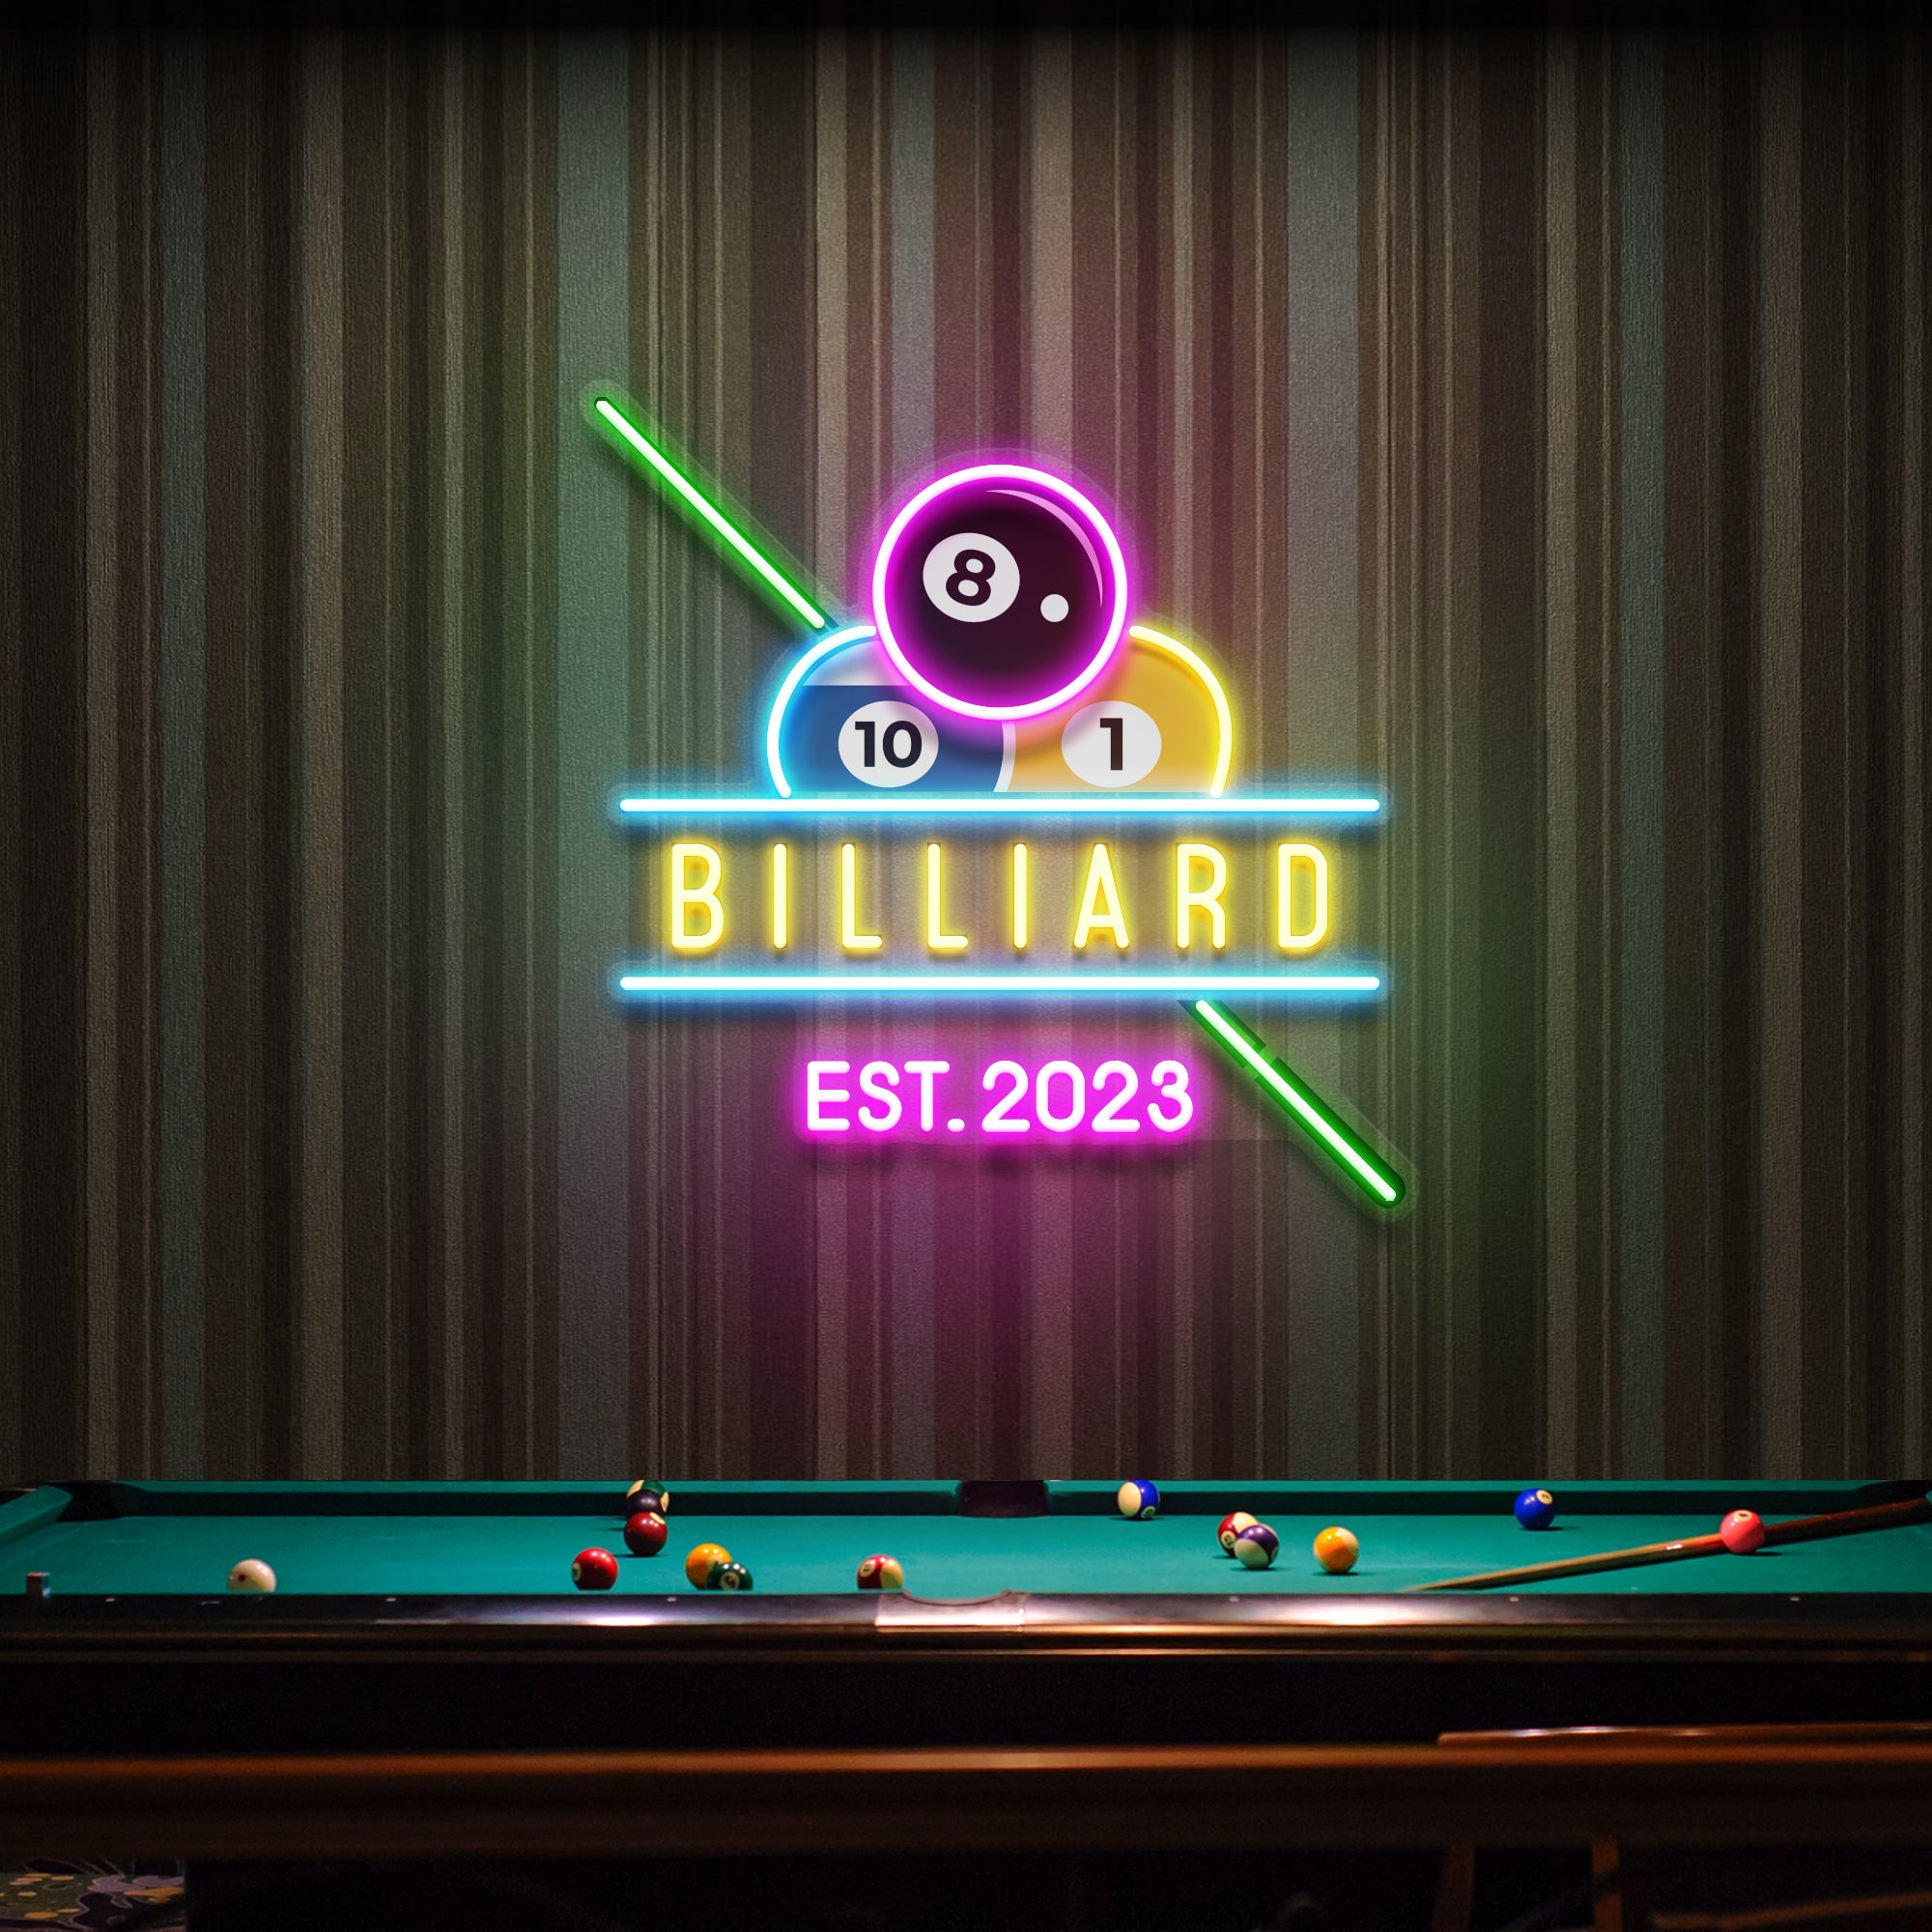 Billiards Pool Room Decor Artwork Led Neon Sign Light - Neonbir